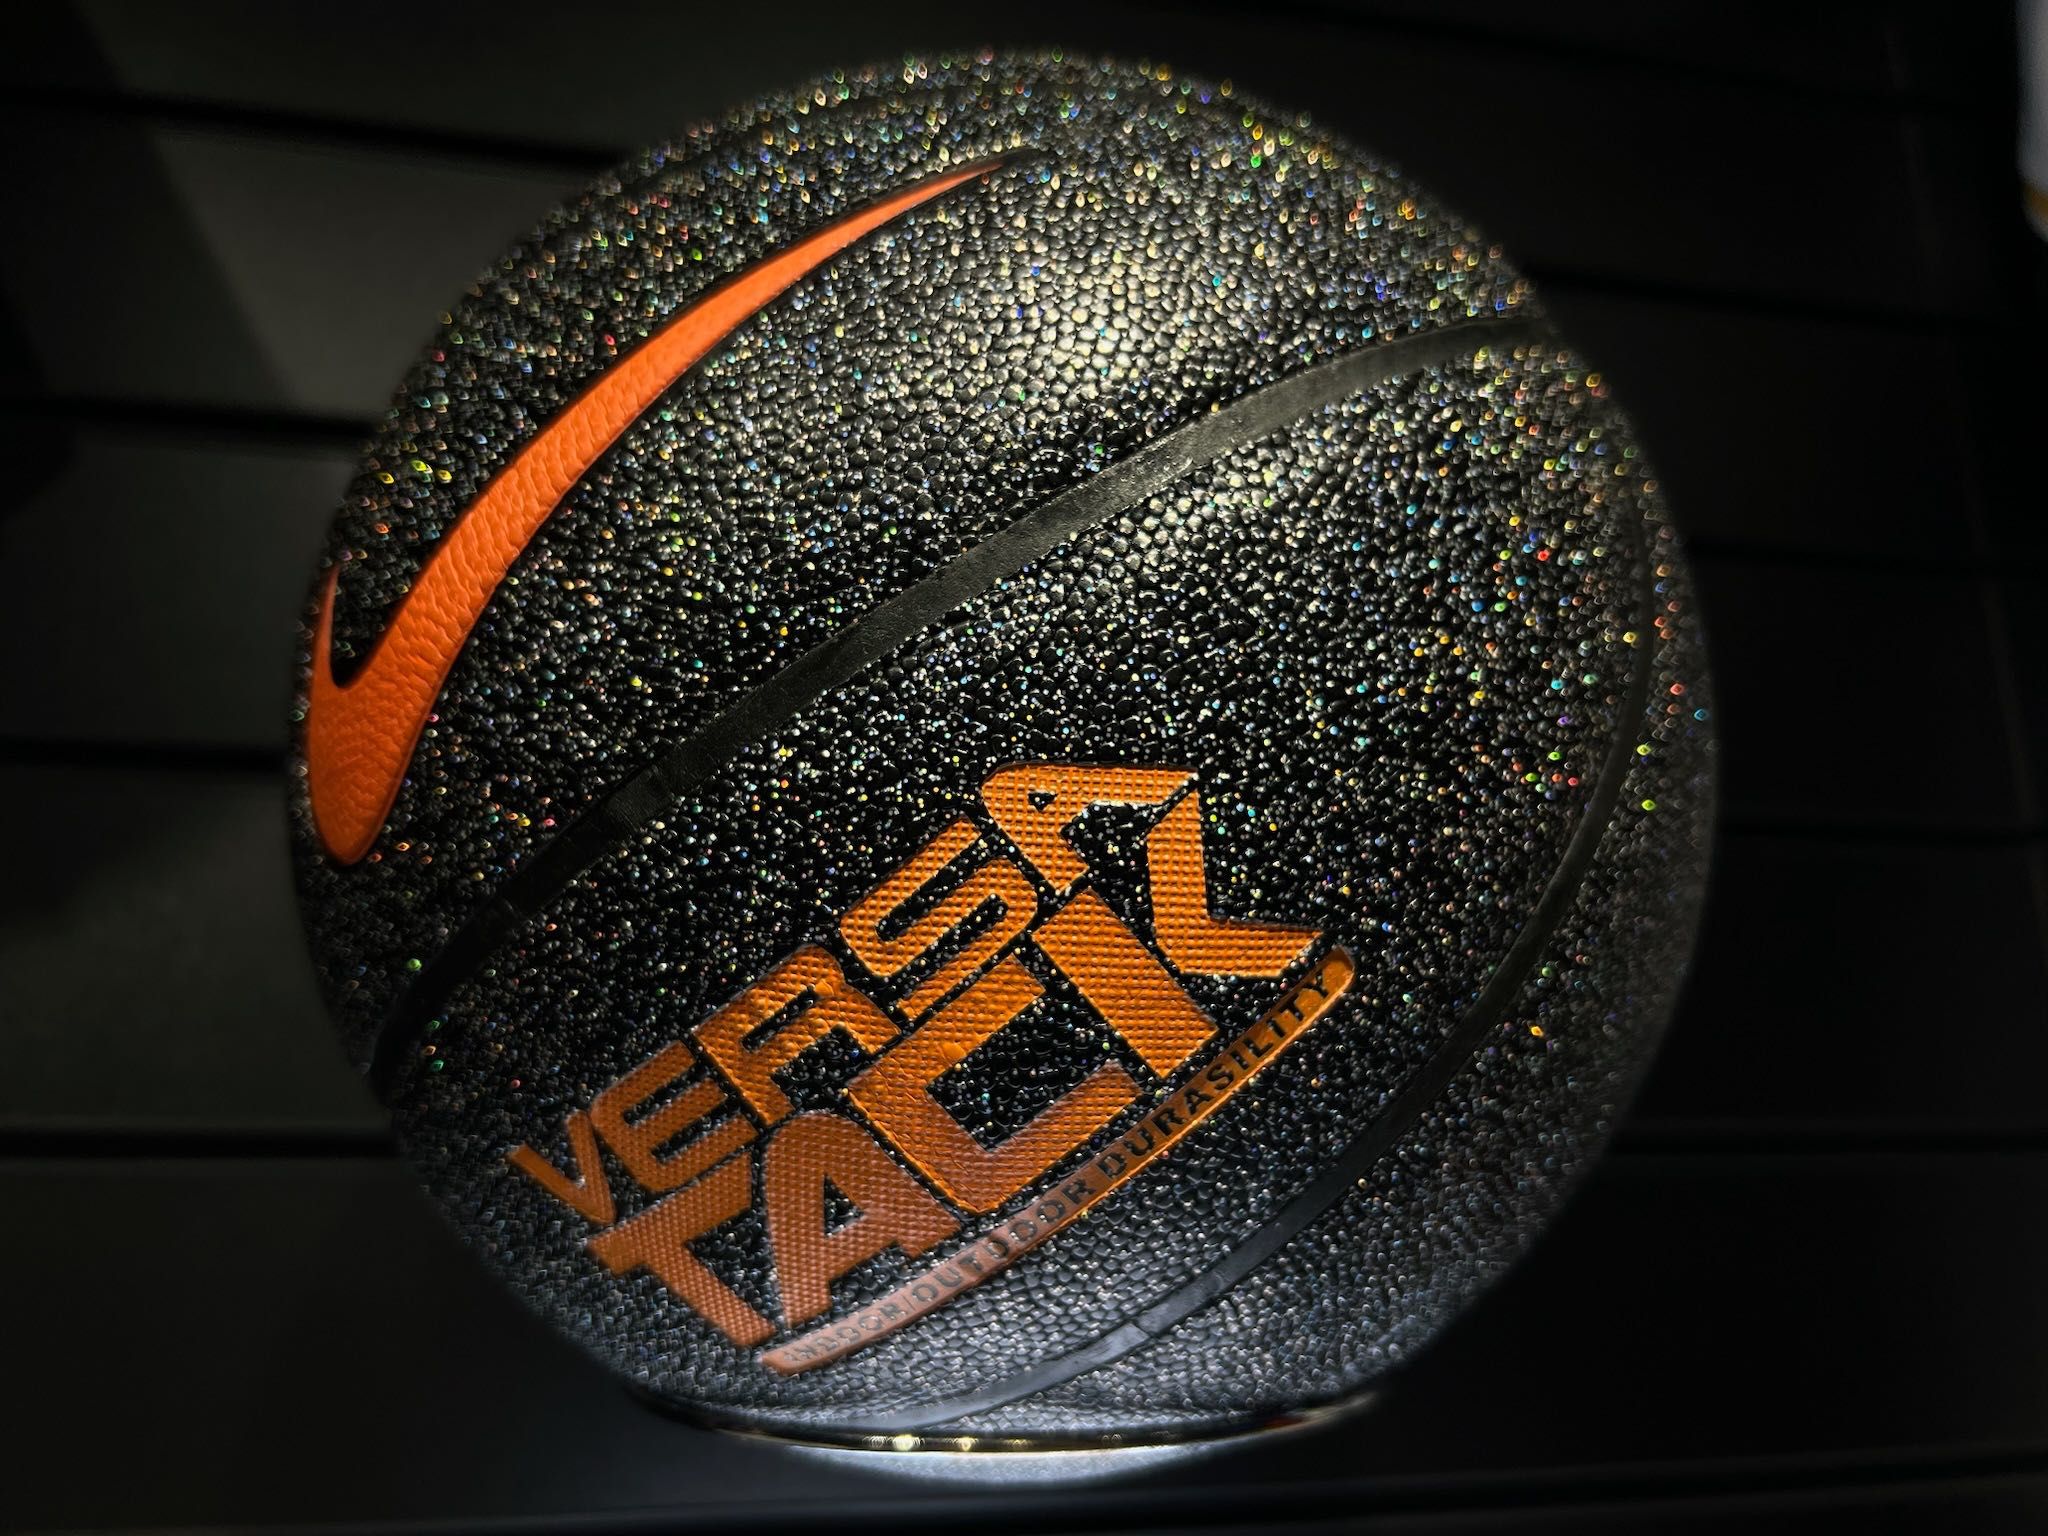 Nike Versa Tack мяч баскетбольный размер 7 в Алматы